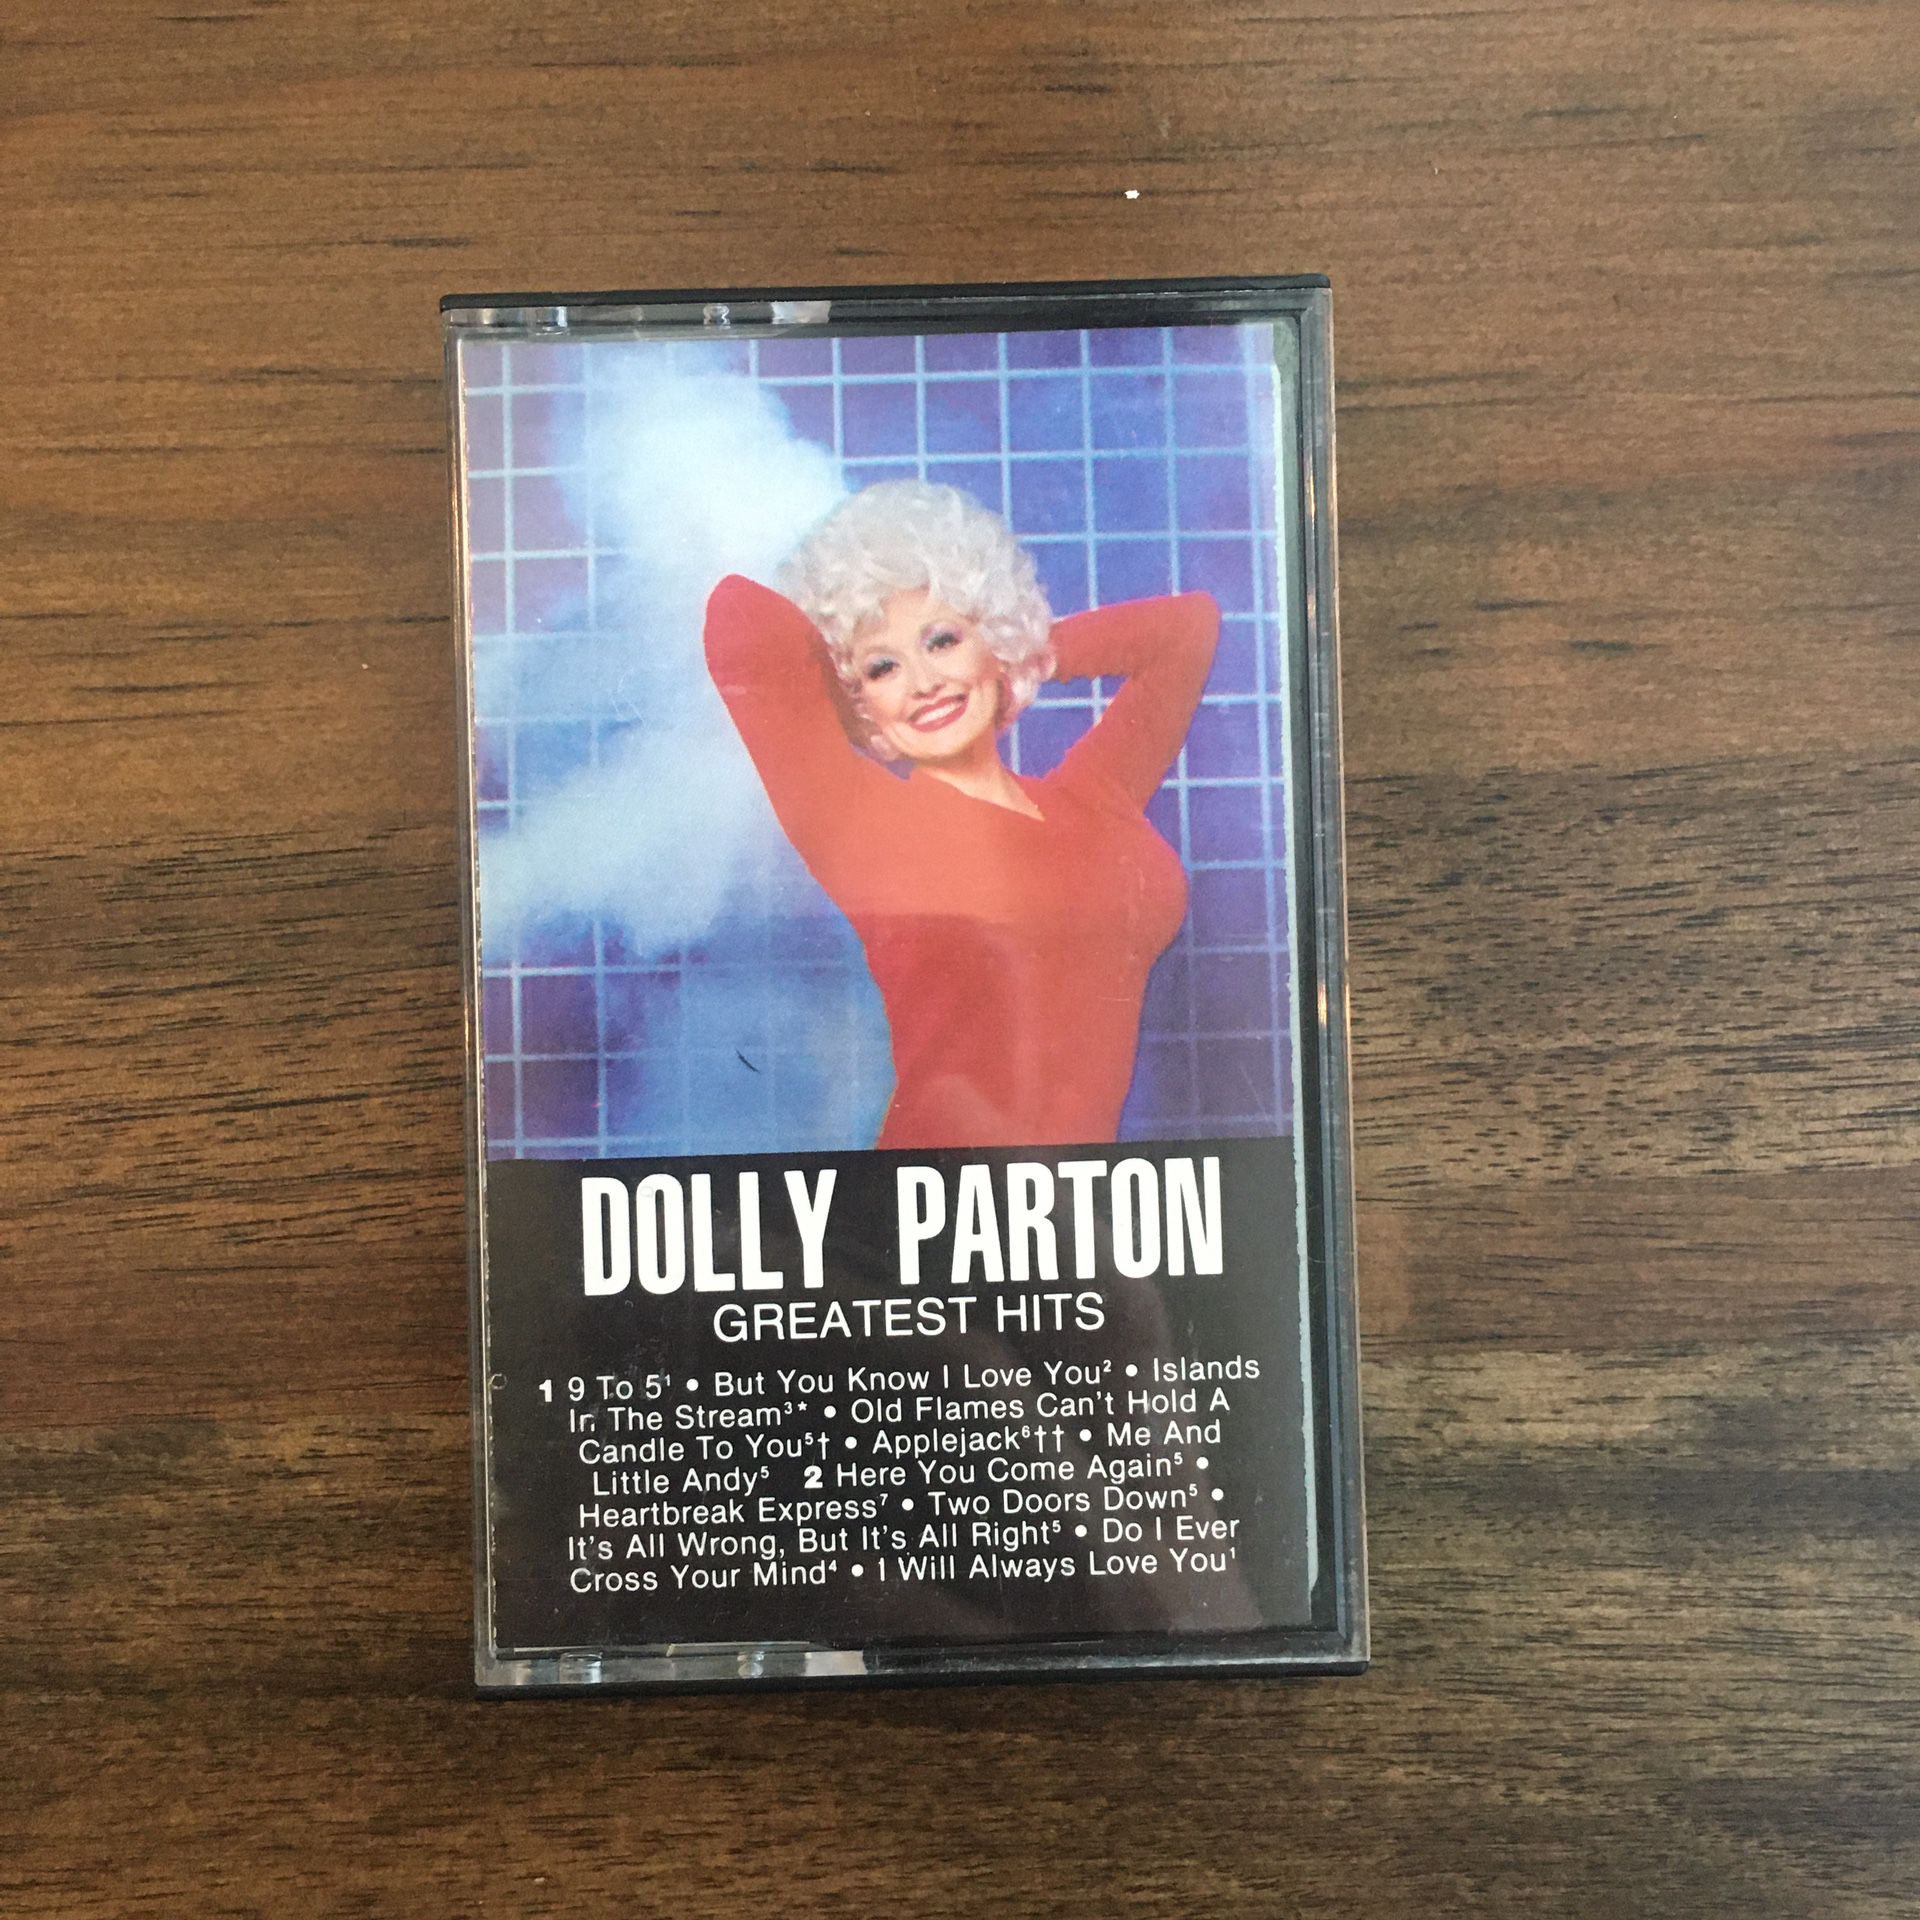 Dolly Parton Greatest Hits Cassette Tape album